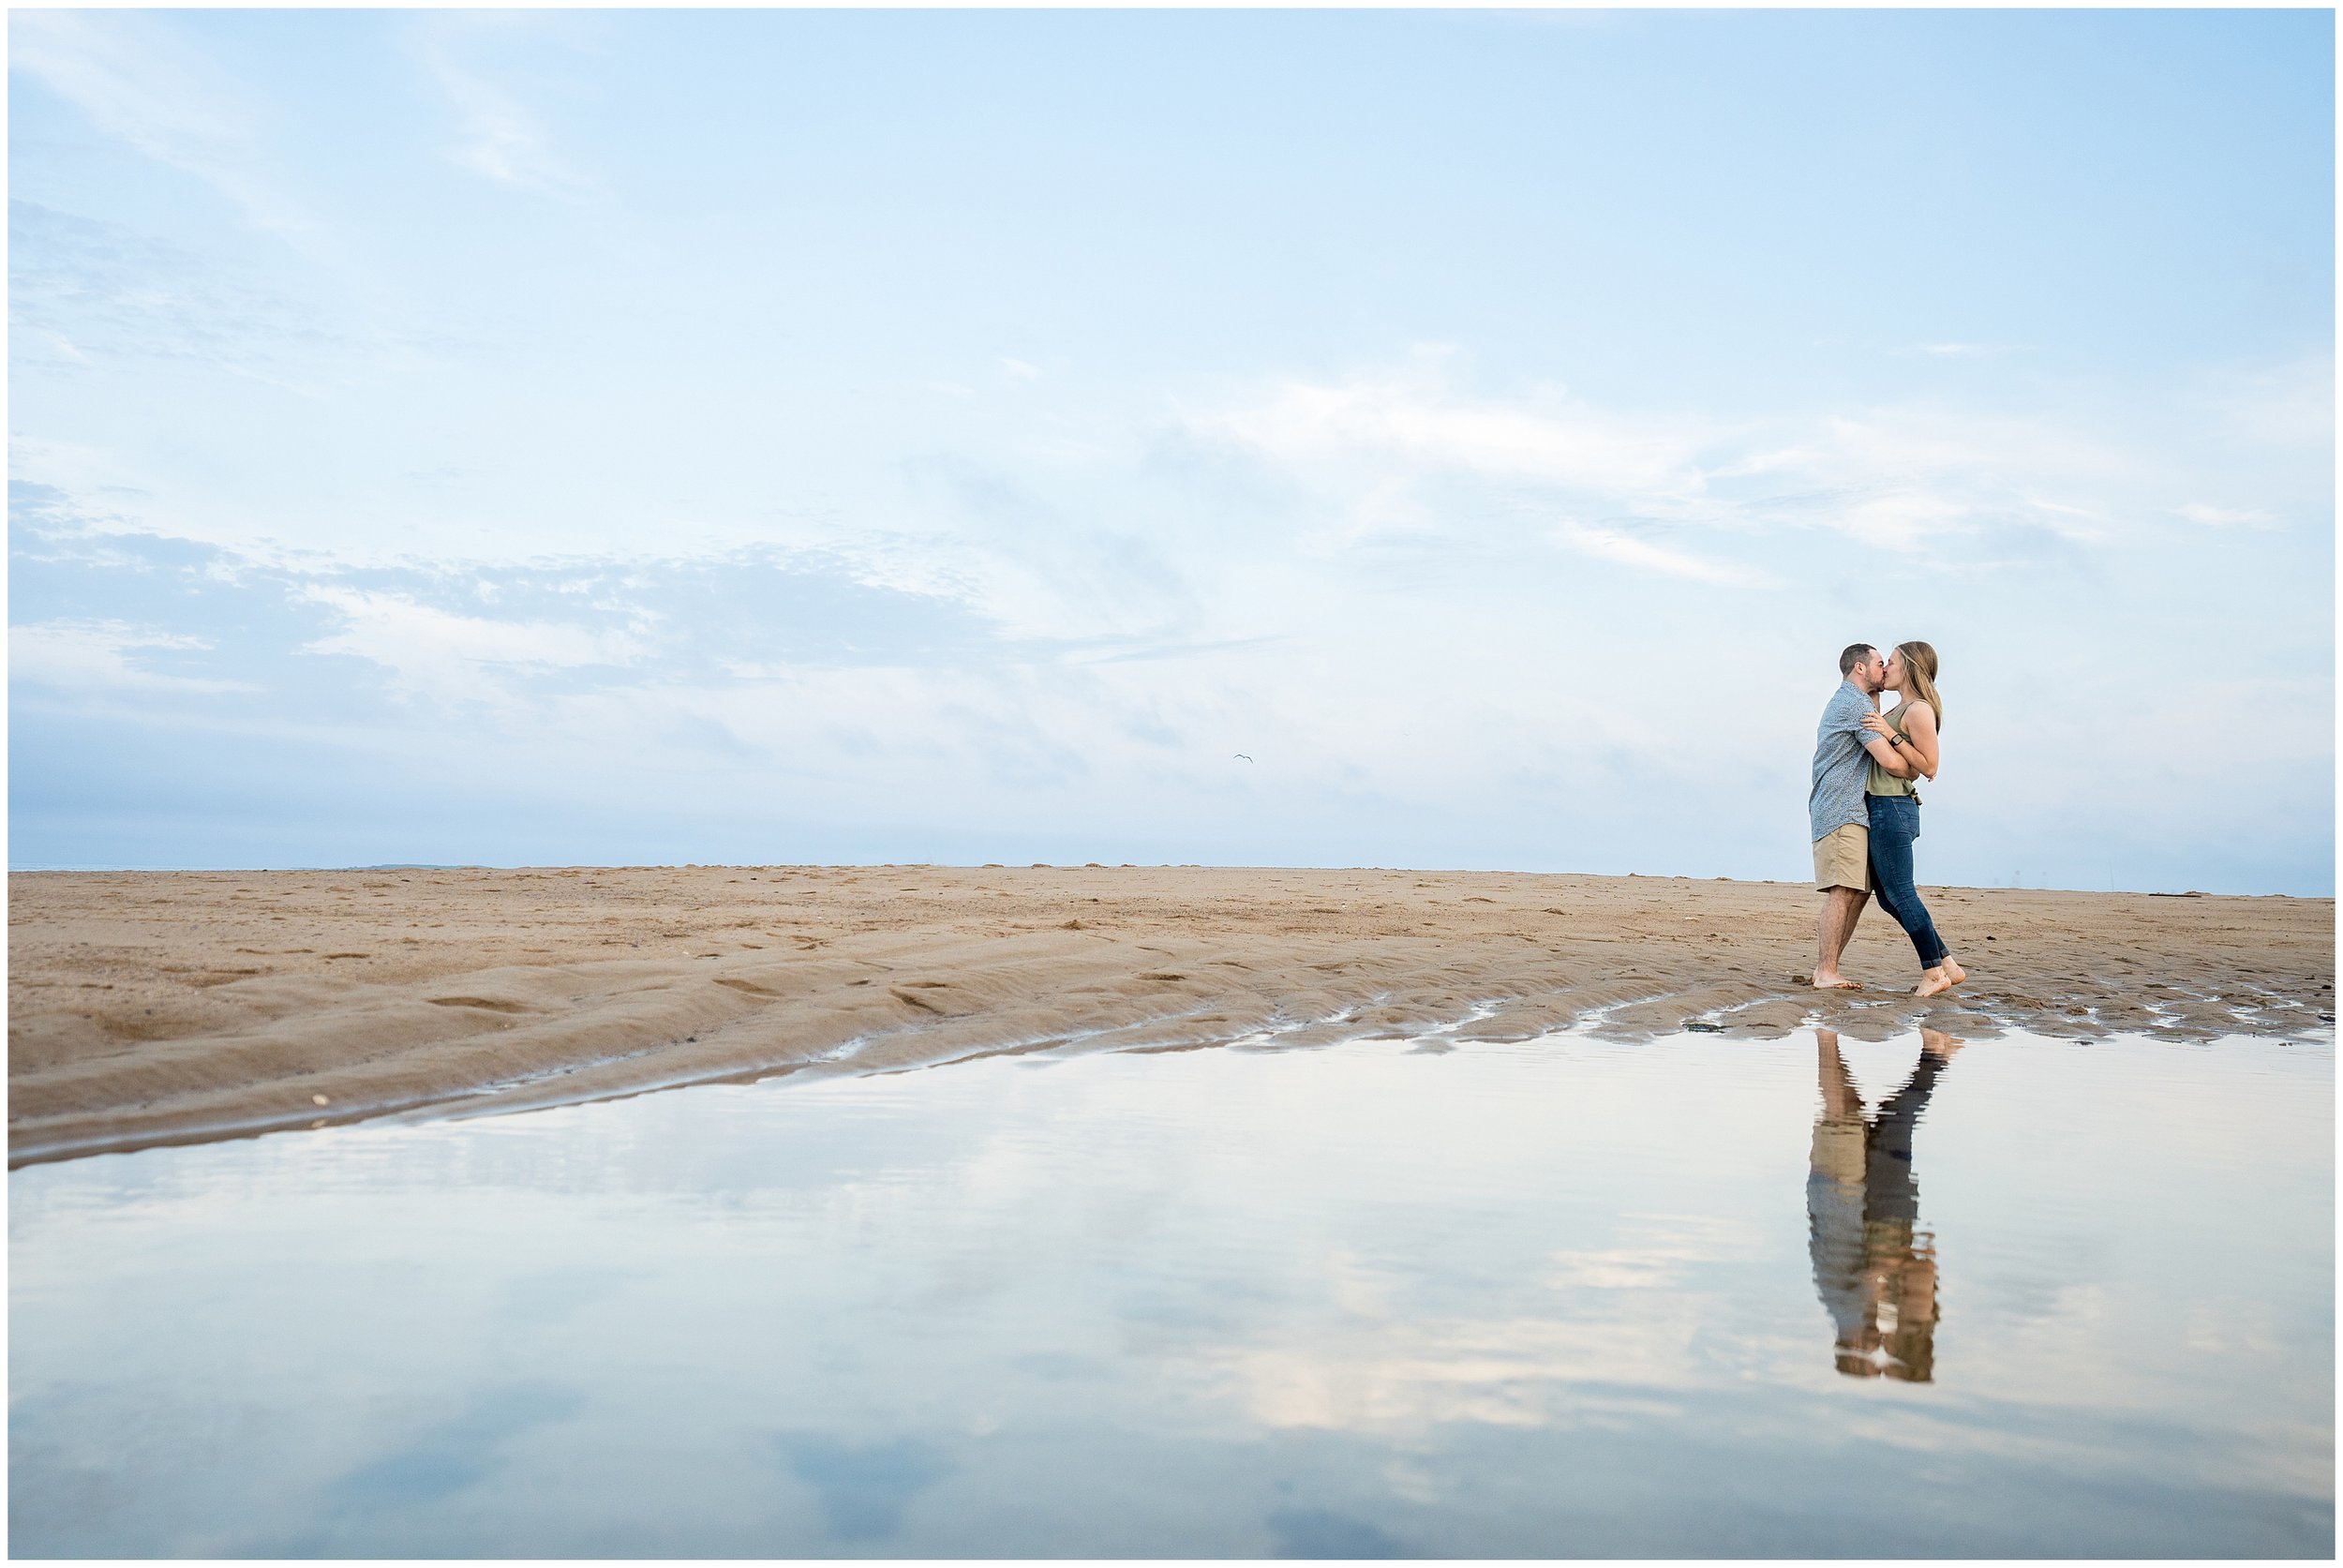 Old Orchard Beach Wedding Photographers, Surprise Proposal Photographers, Two Adventurous Souls- 070723_0012.jpg